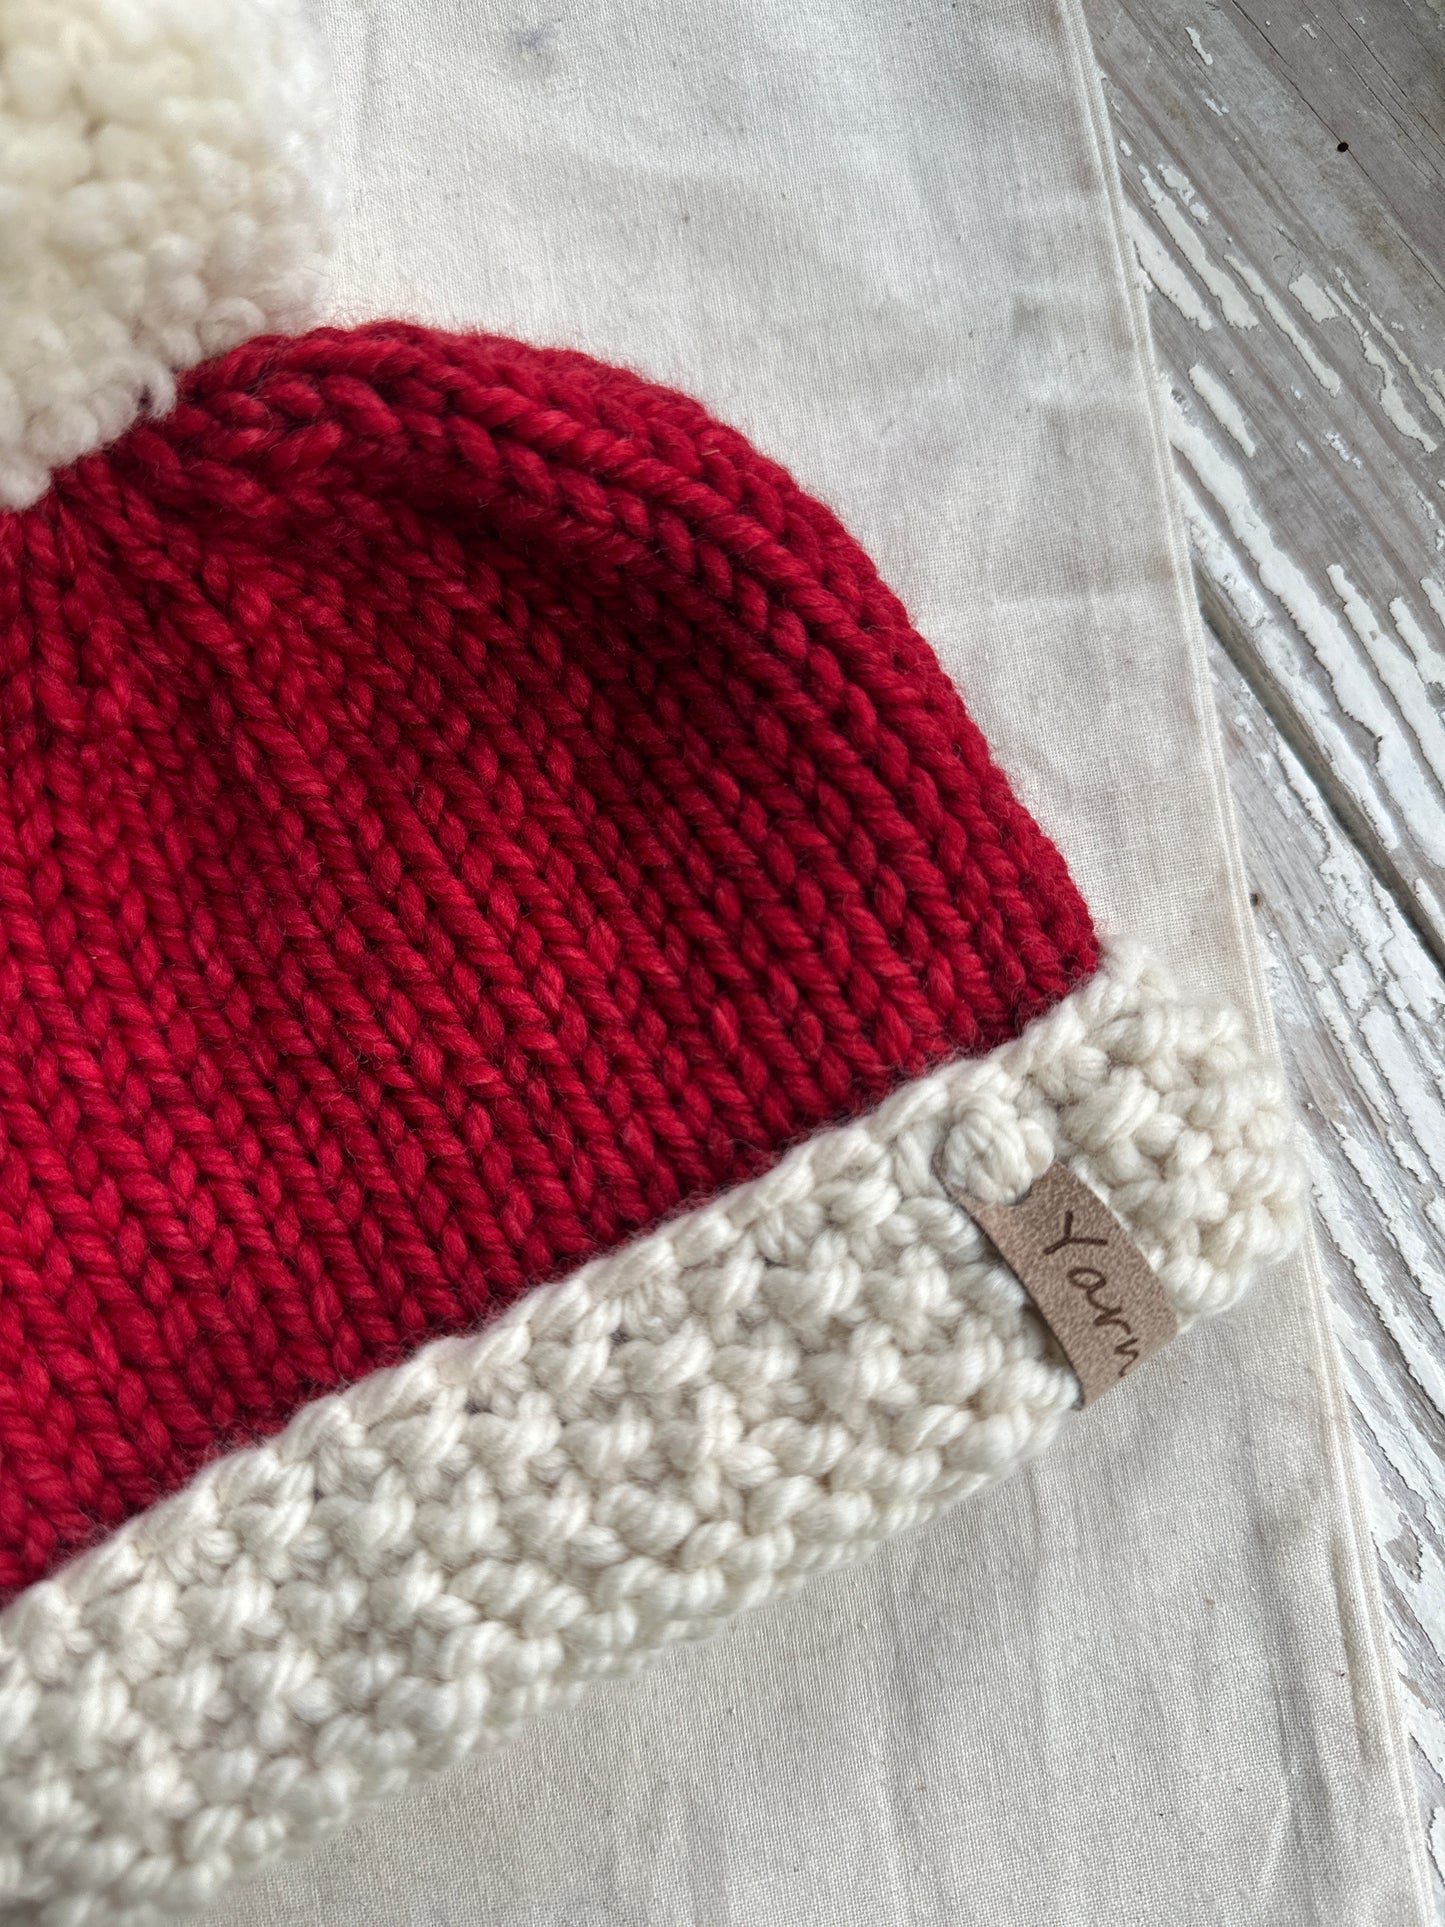 Baby-3 month merino wool knit hat with yarn Pom